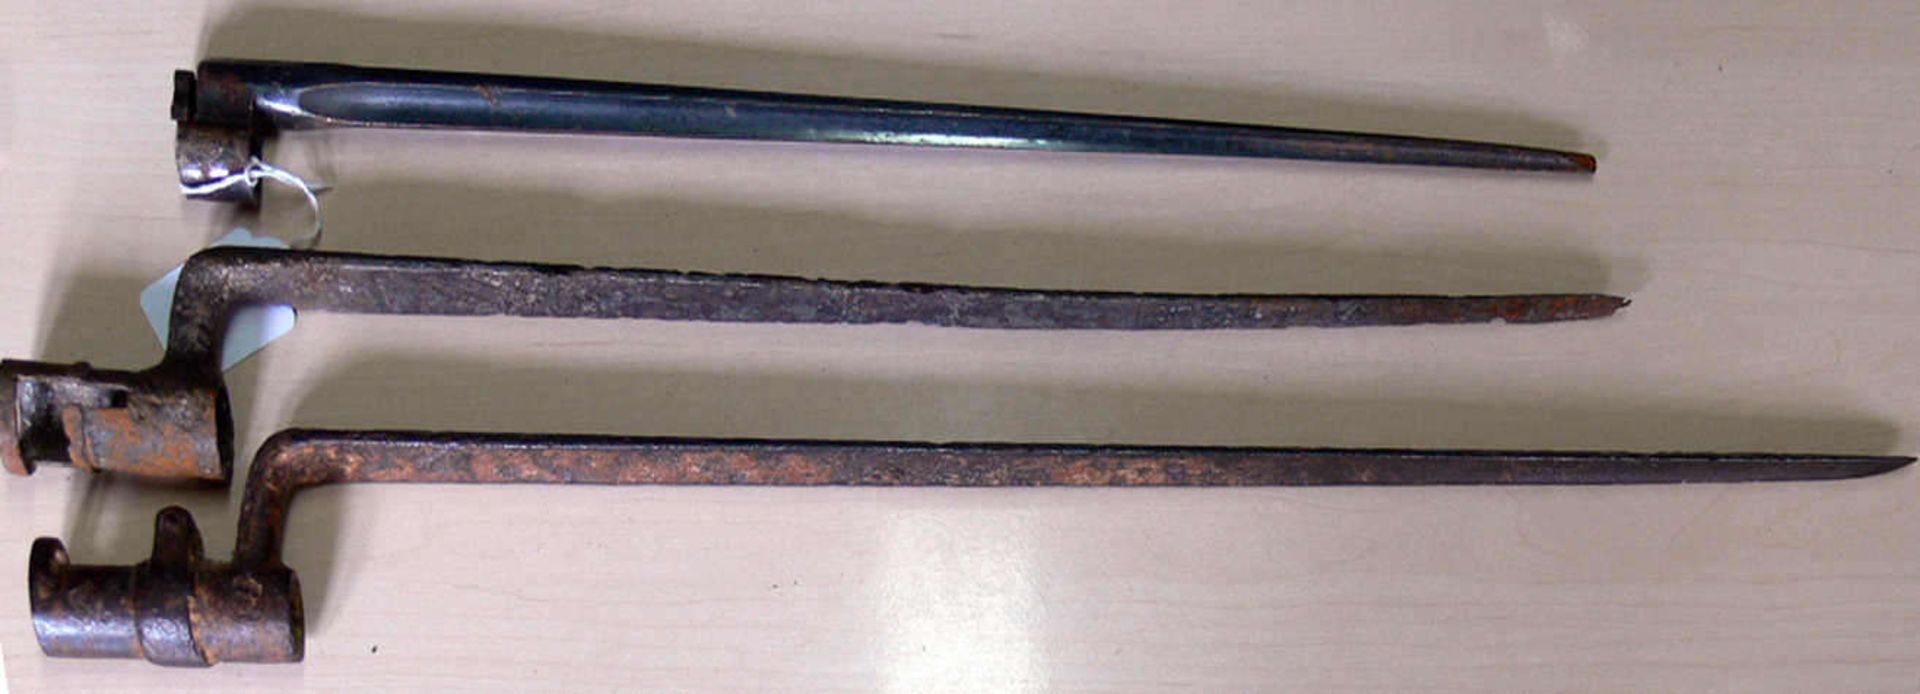 Drei Bajonette (1 x Enfield Bajonette?). Klingenlängen: ca. 53 cm, ca. 44 cm, ca. 43 cm. Mit